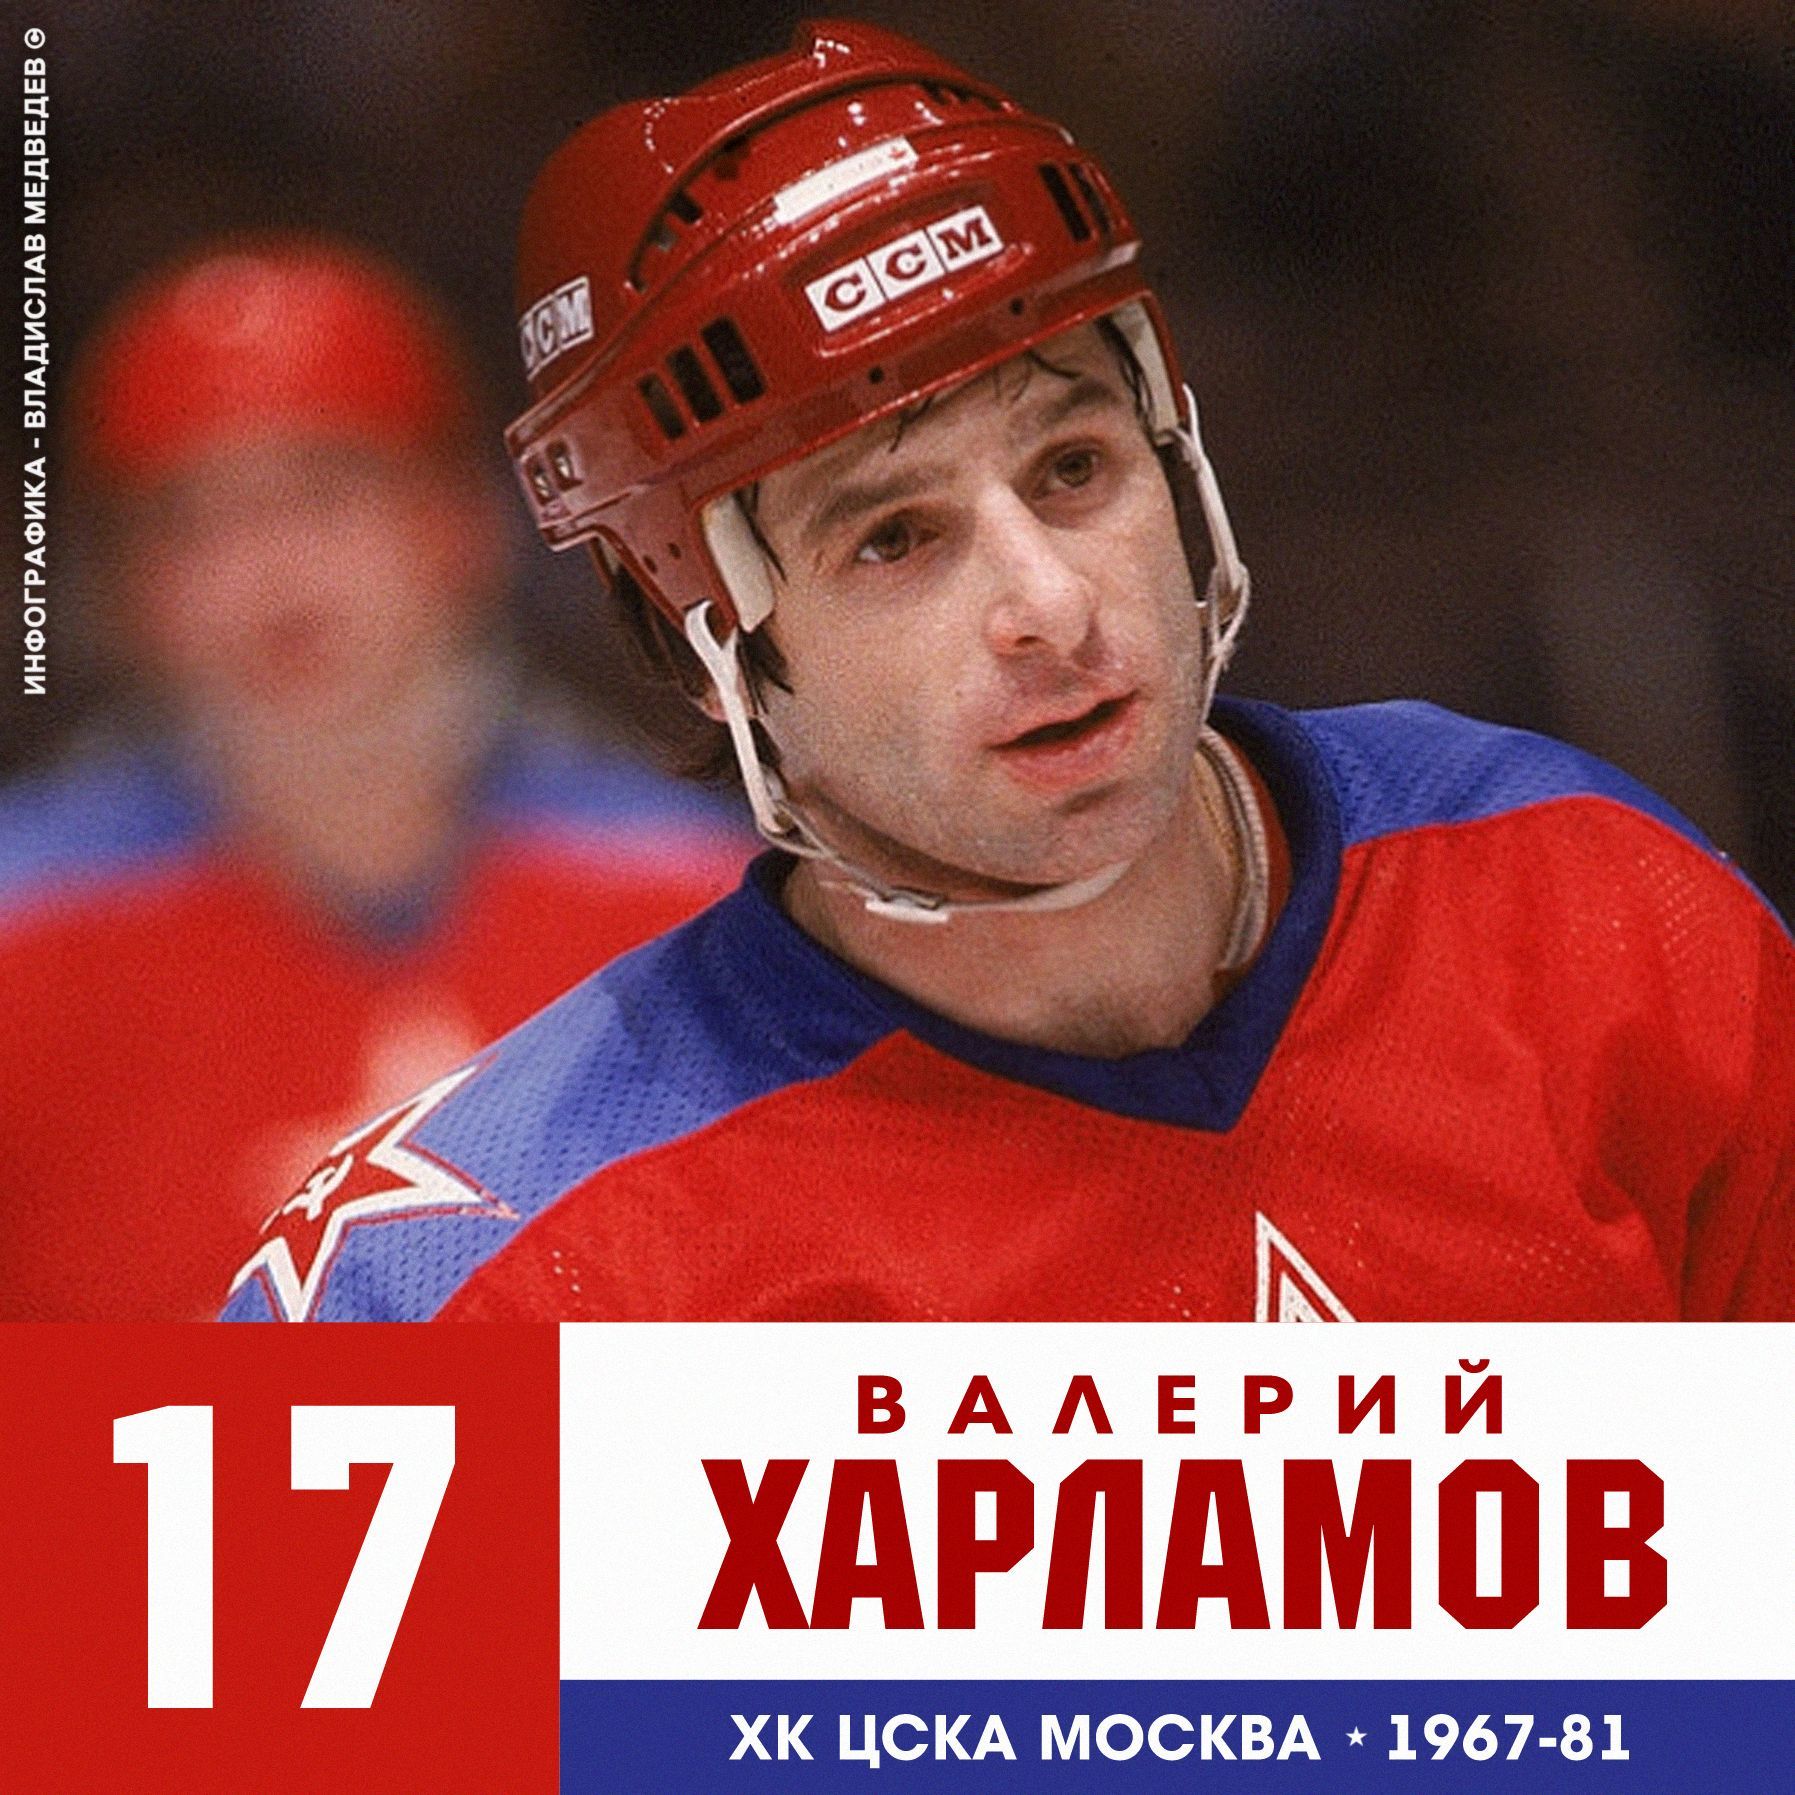 Valery Kharlamov square appeared in Moscow - Valery Kharlamov, Legend No17, CSKA, HC CSKA, Hockey, Moscow, Danilovsky District, Square